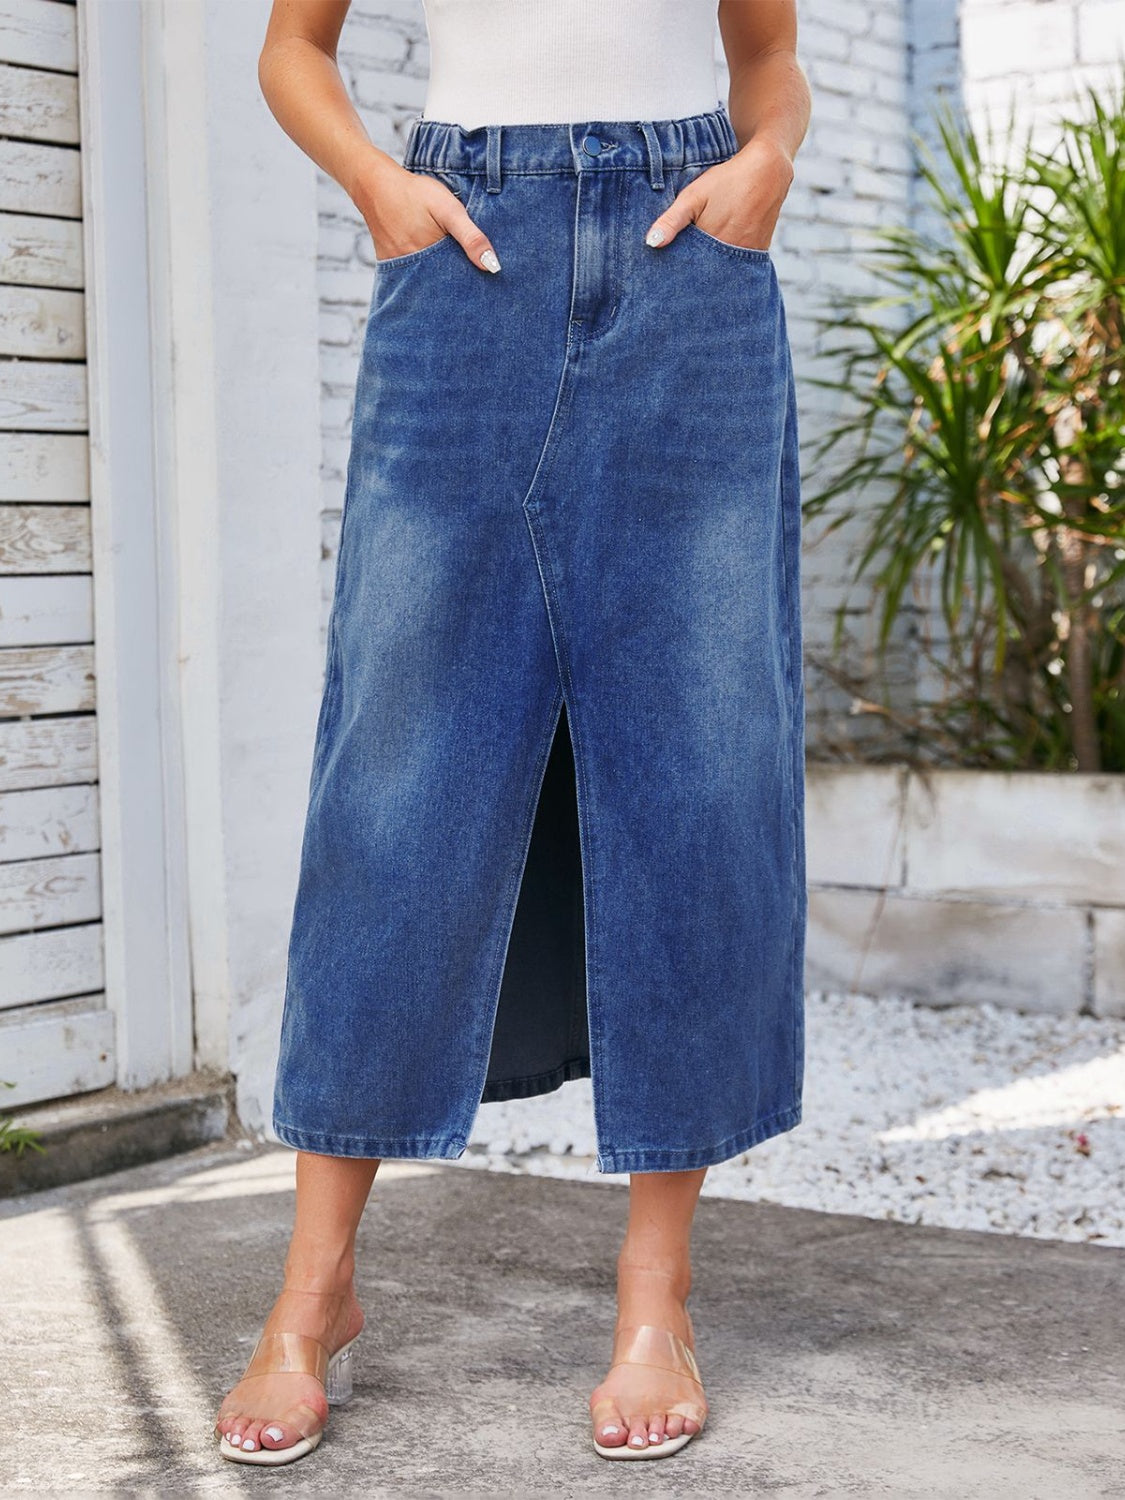 Slit Midi Denim Skirt with Pockets New Women's Fashion Long Jean Skirt Maxi